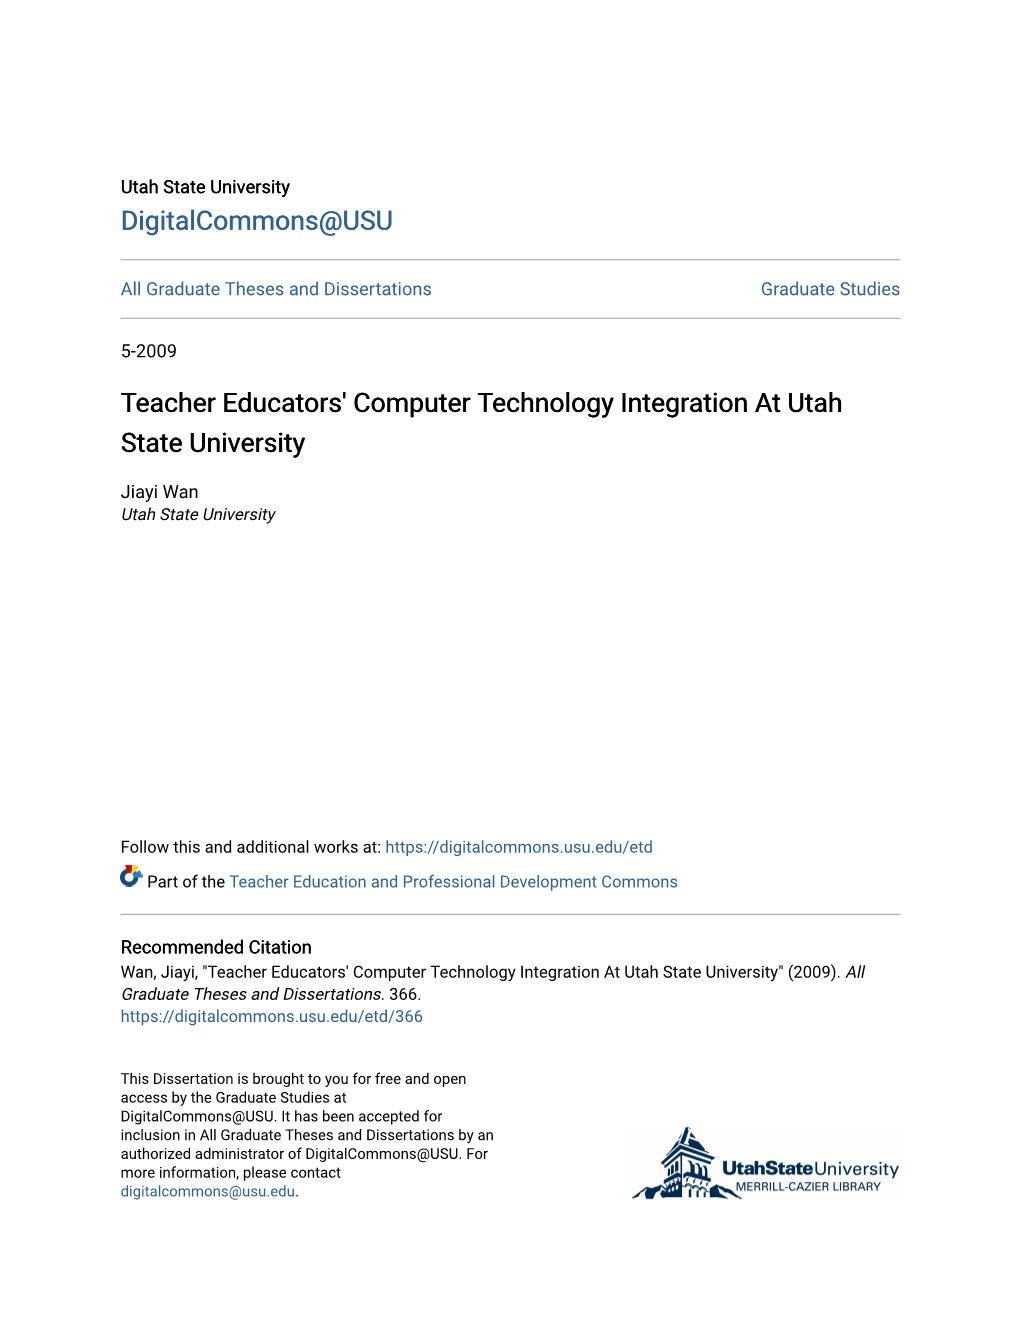 Teacher Educators' Computer Technology Integration at Utah State University